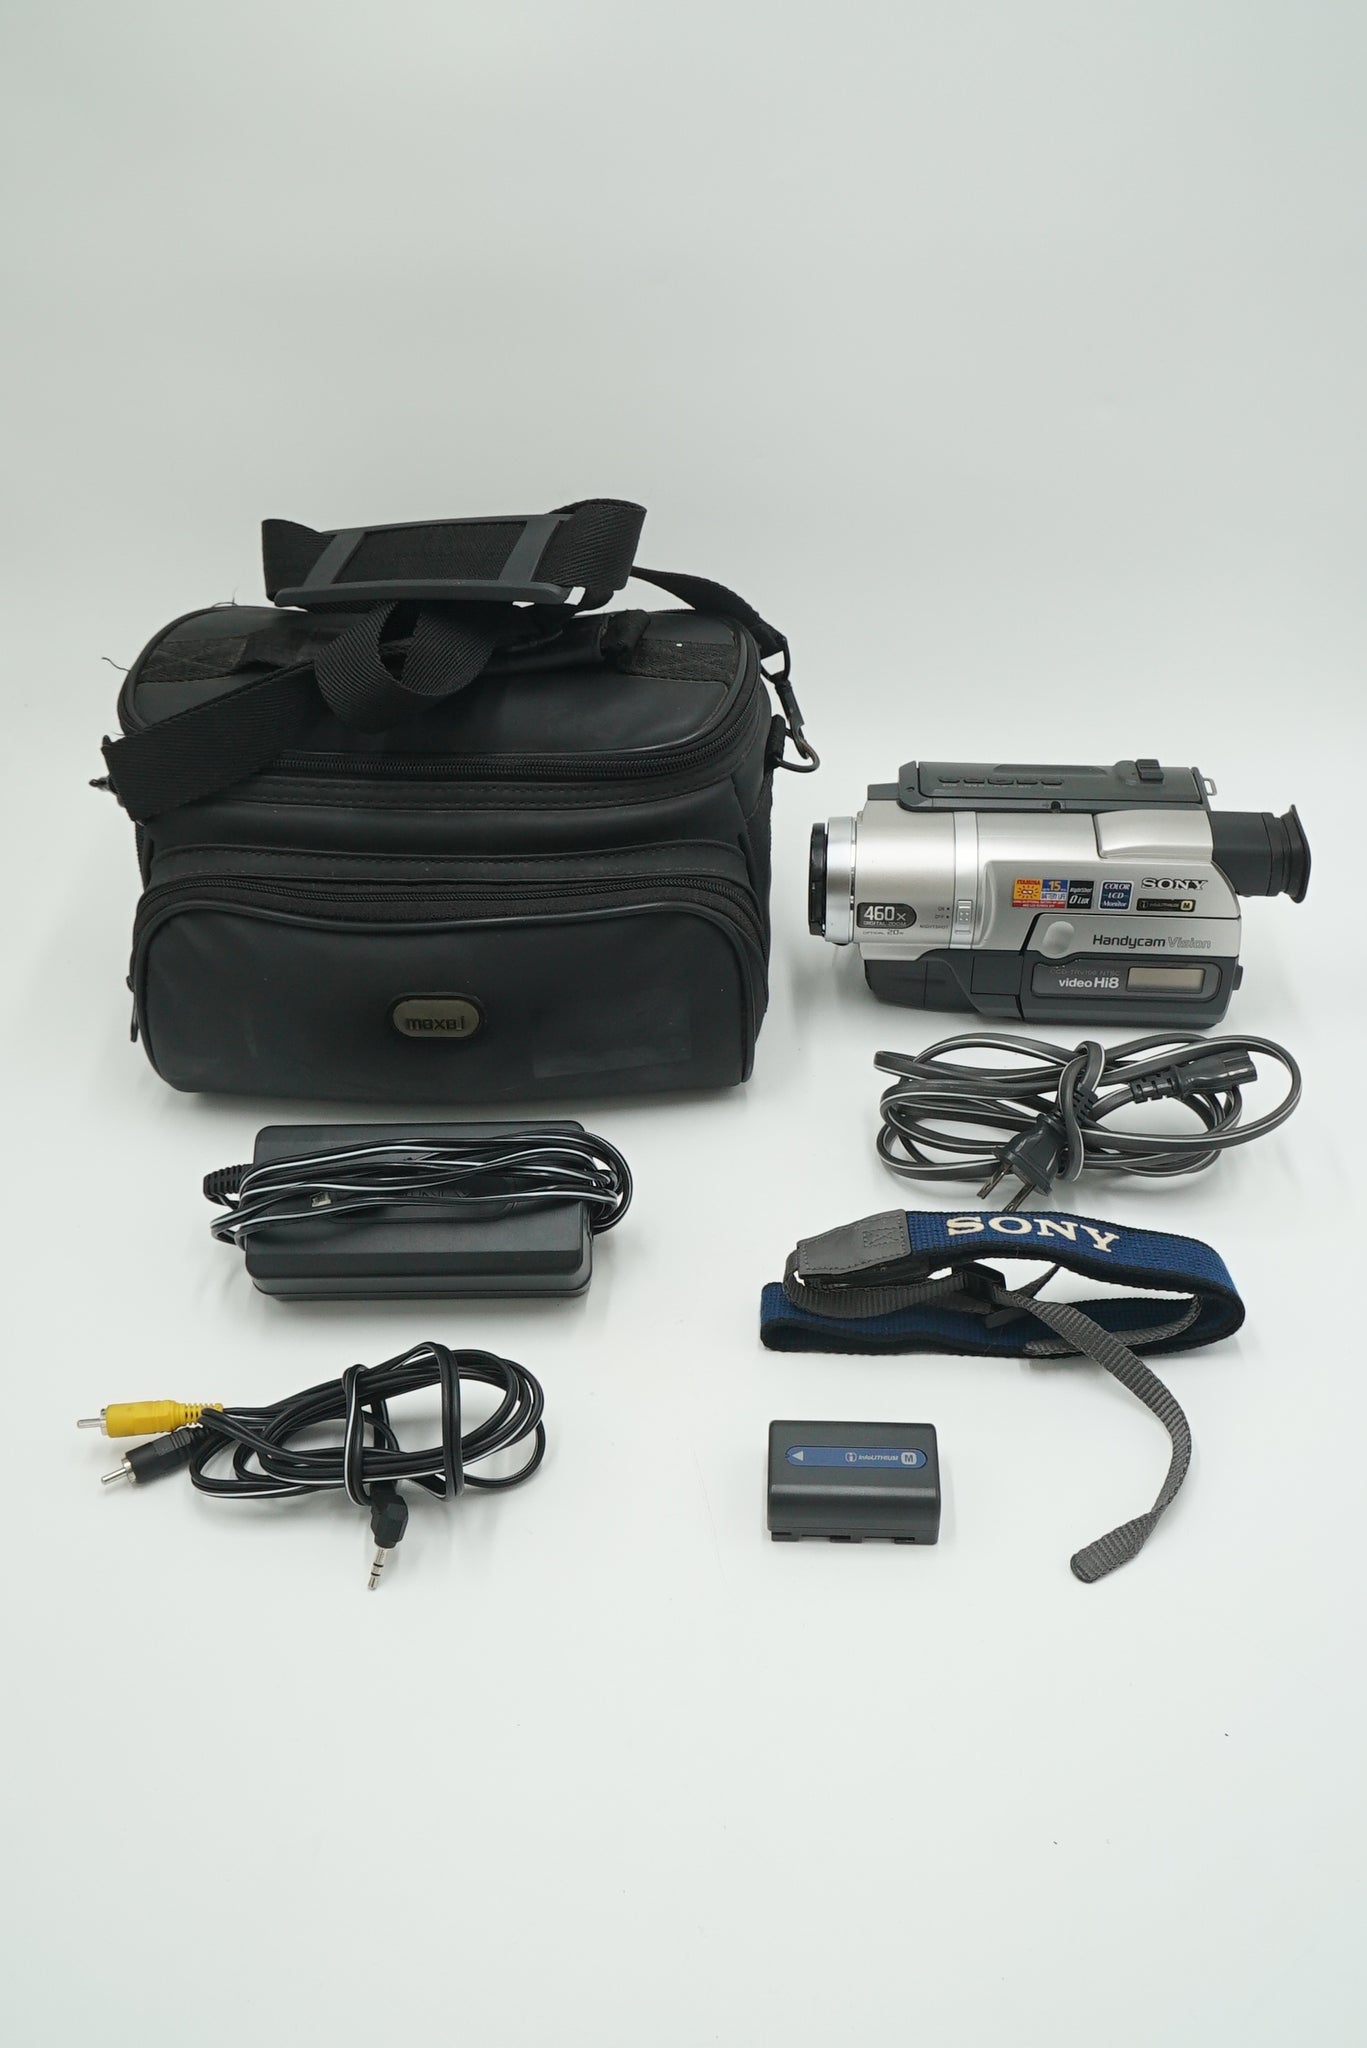 Sony CCDTRV108/613220 Hi-8 Handycam, Used